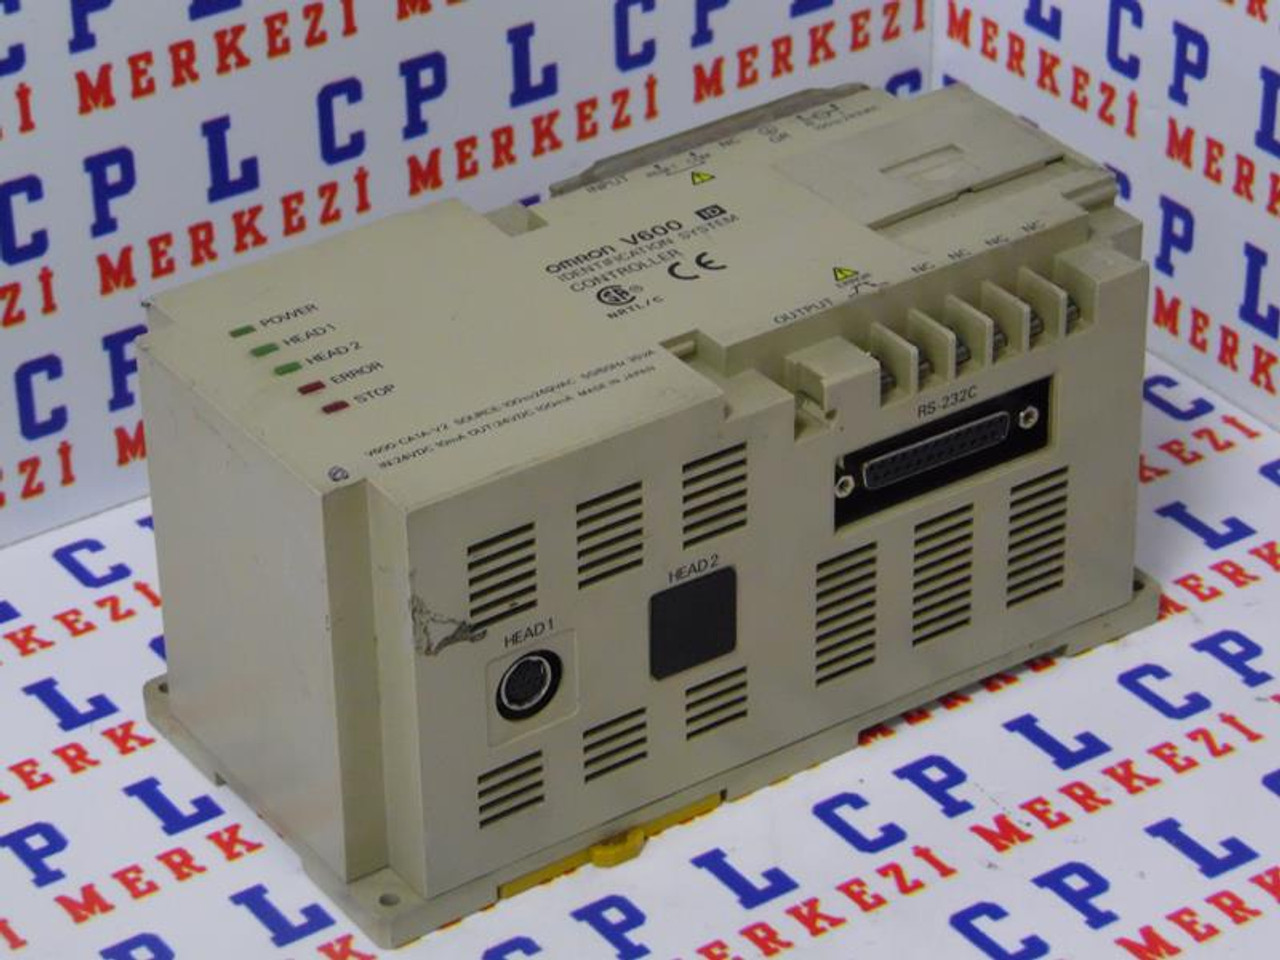 V600 CA1A V2, V600-CA1A-V2 Omron System Controller